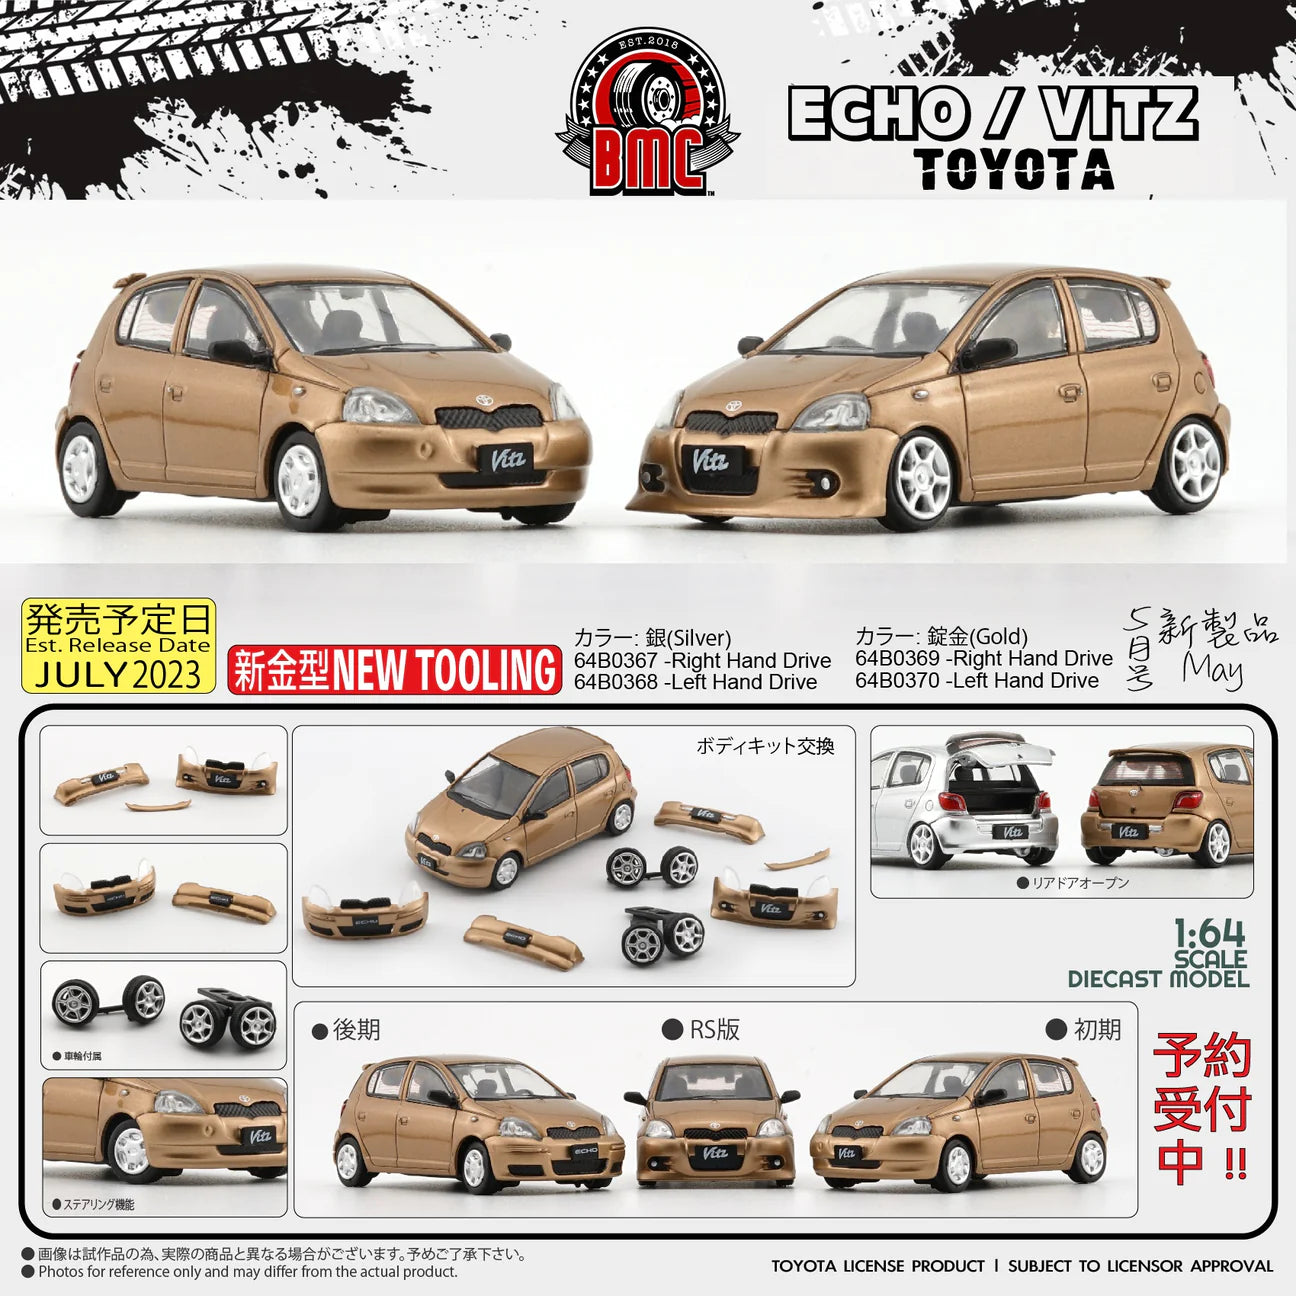 BM Creations 1/64 1998 Toyota Echo / Vitz 5 doors Golden LHD